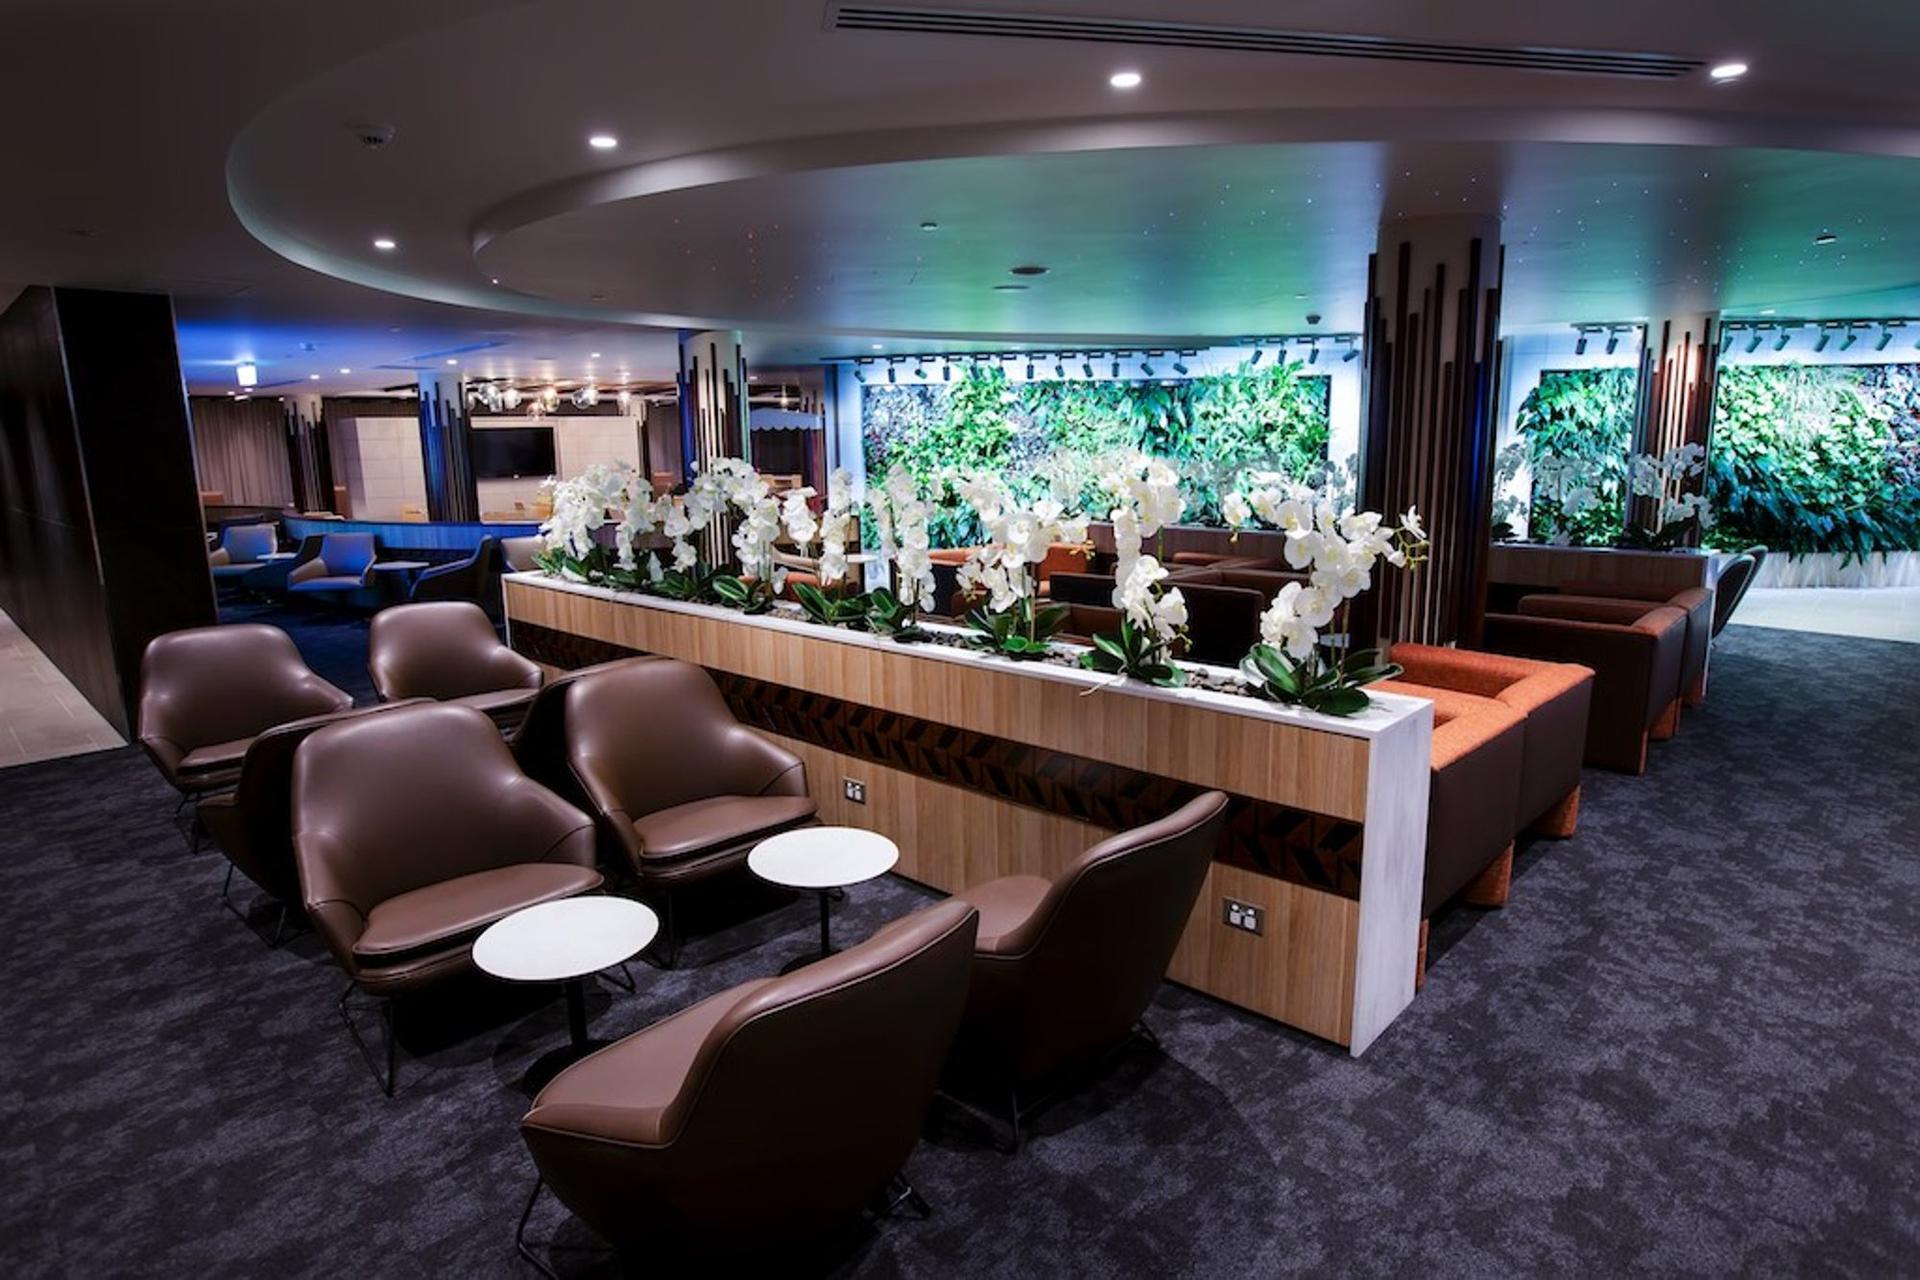 Fiji Airways Premier Lounge image 1 of 31